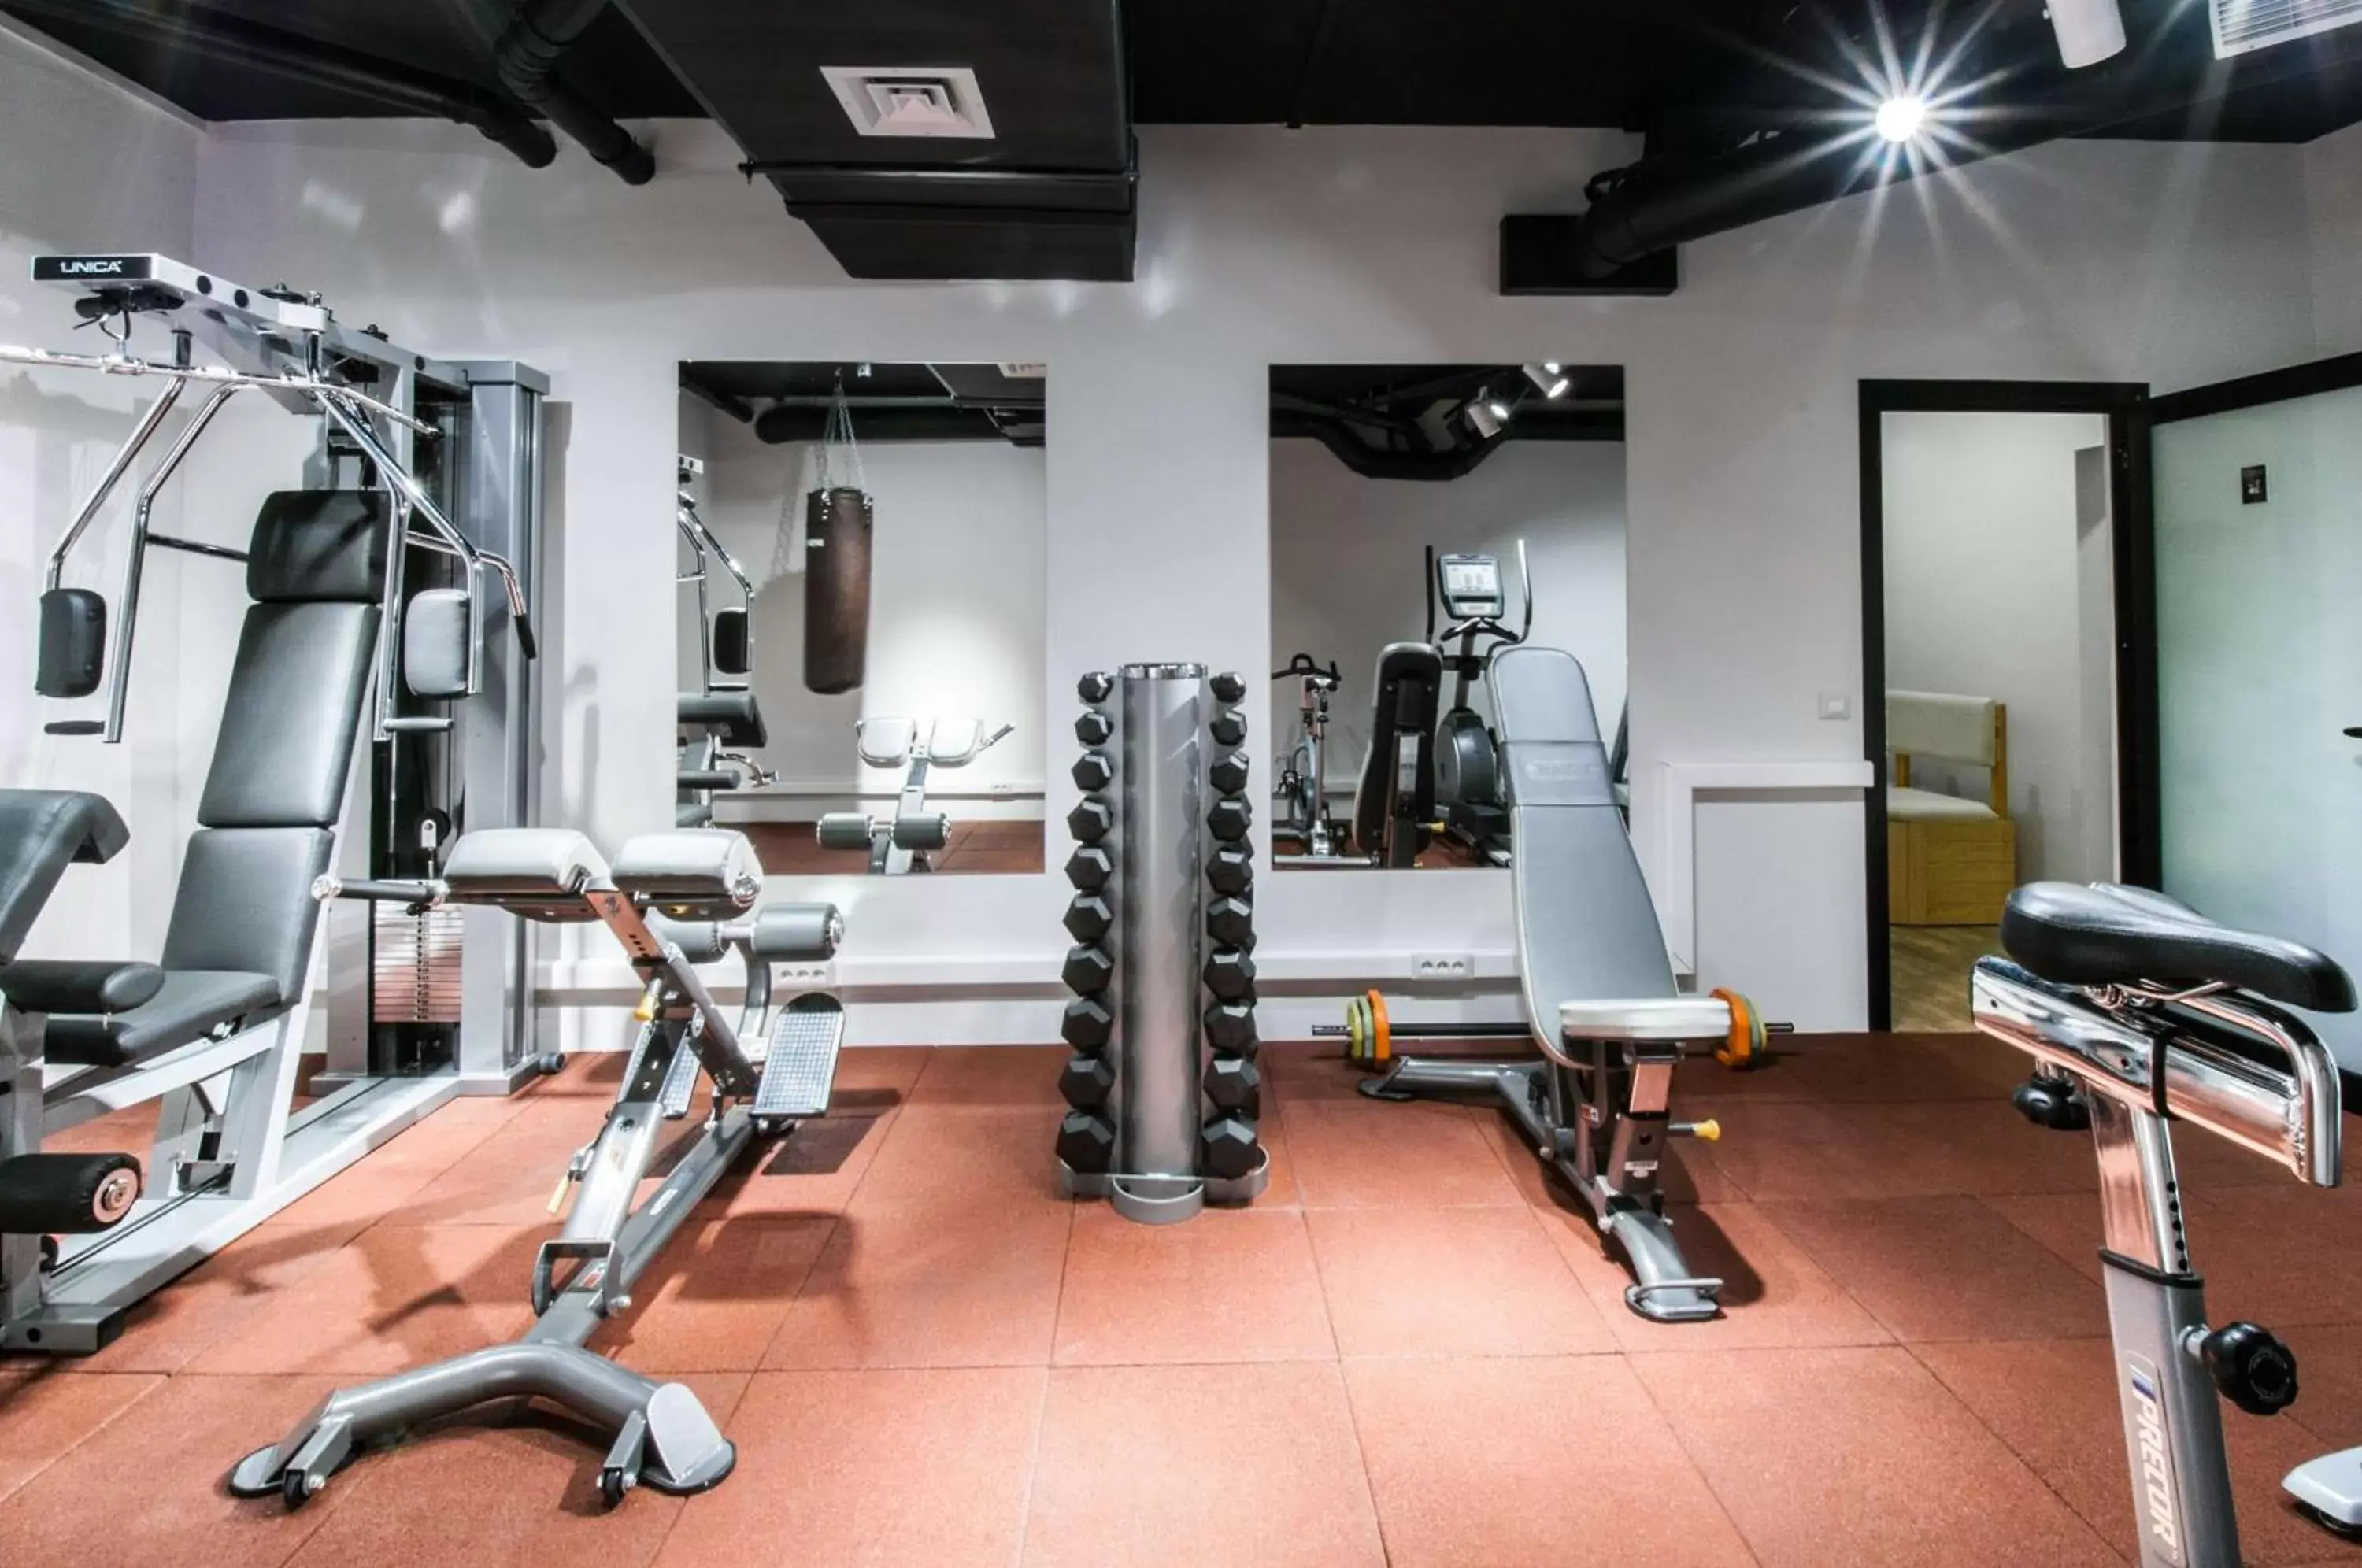 Fitness centre/facilities, Fitness Center/Facilities in Best Western Premier Natalija Residence